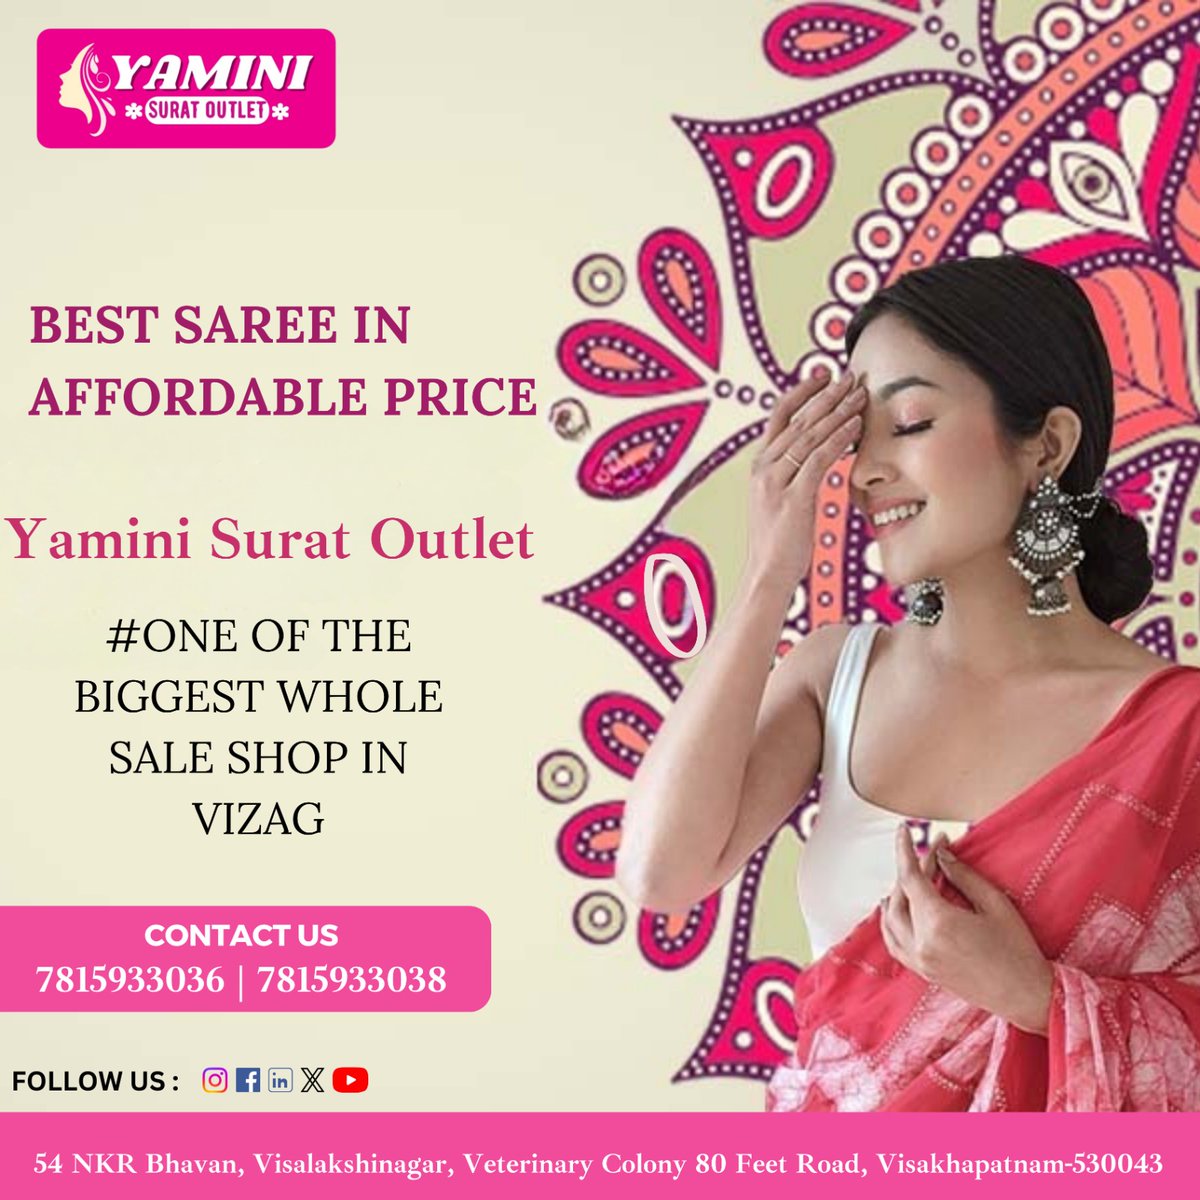 Yamini Agencies' collection, where every thread weaves a tale of style and savings.

CONTACT US: 7815933036 | 7815933038

#SareeLove #IndianCulture #TraditionalWear #SareeStyle #SareeGoals #SareeFashion #PerfectSaree  #SareeGoals #AffordableSarees #YaminiAgencies #SareeDeals